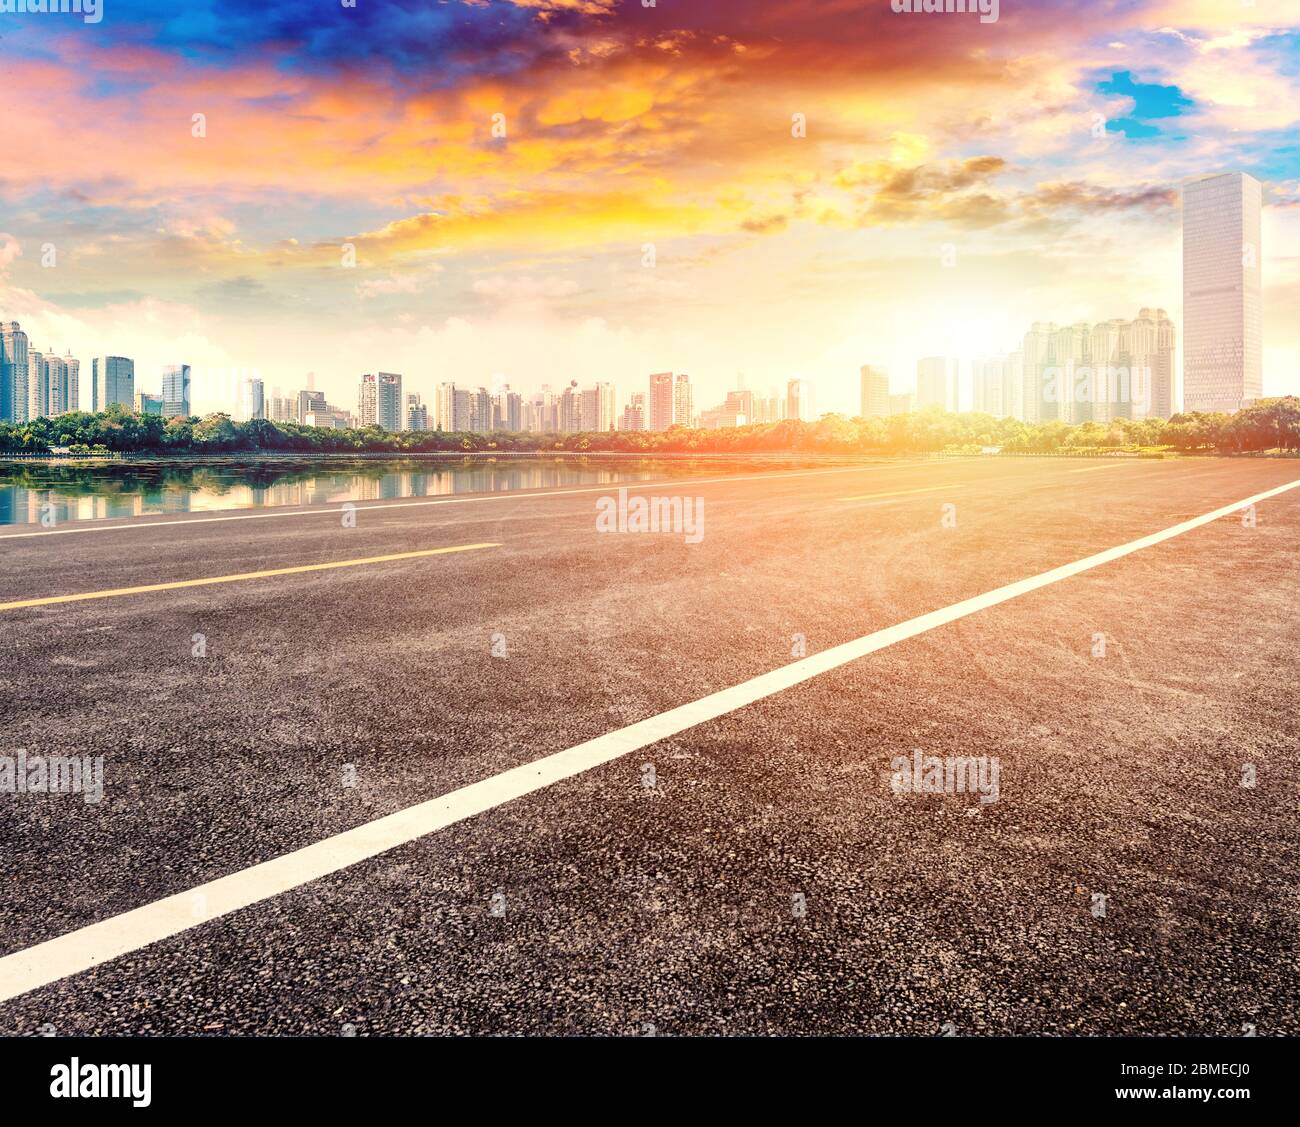 Sunset landscape of empty asphalt road and city buildings. Stock Photo